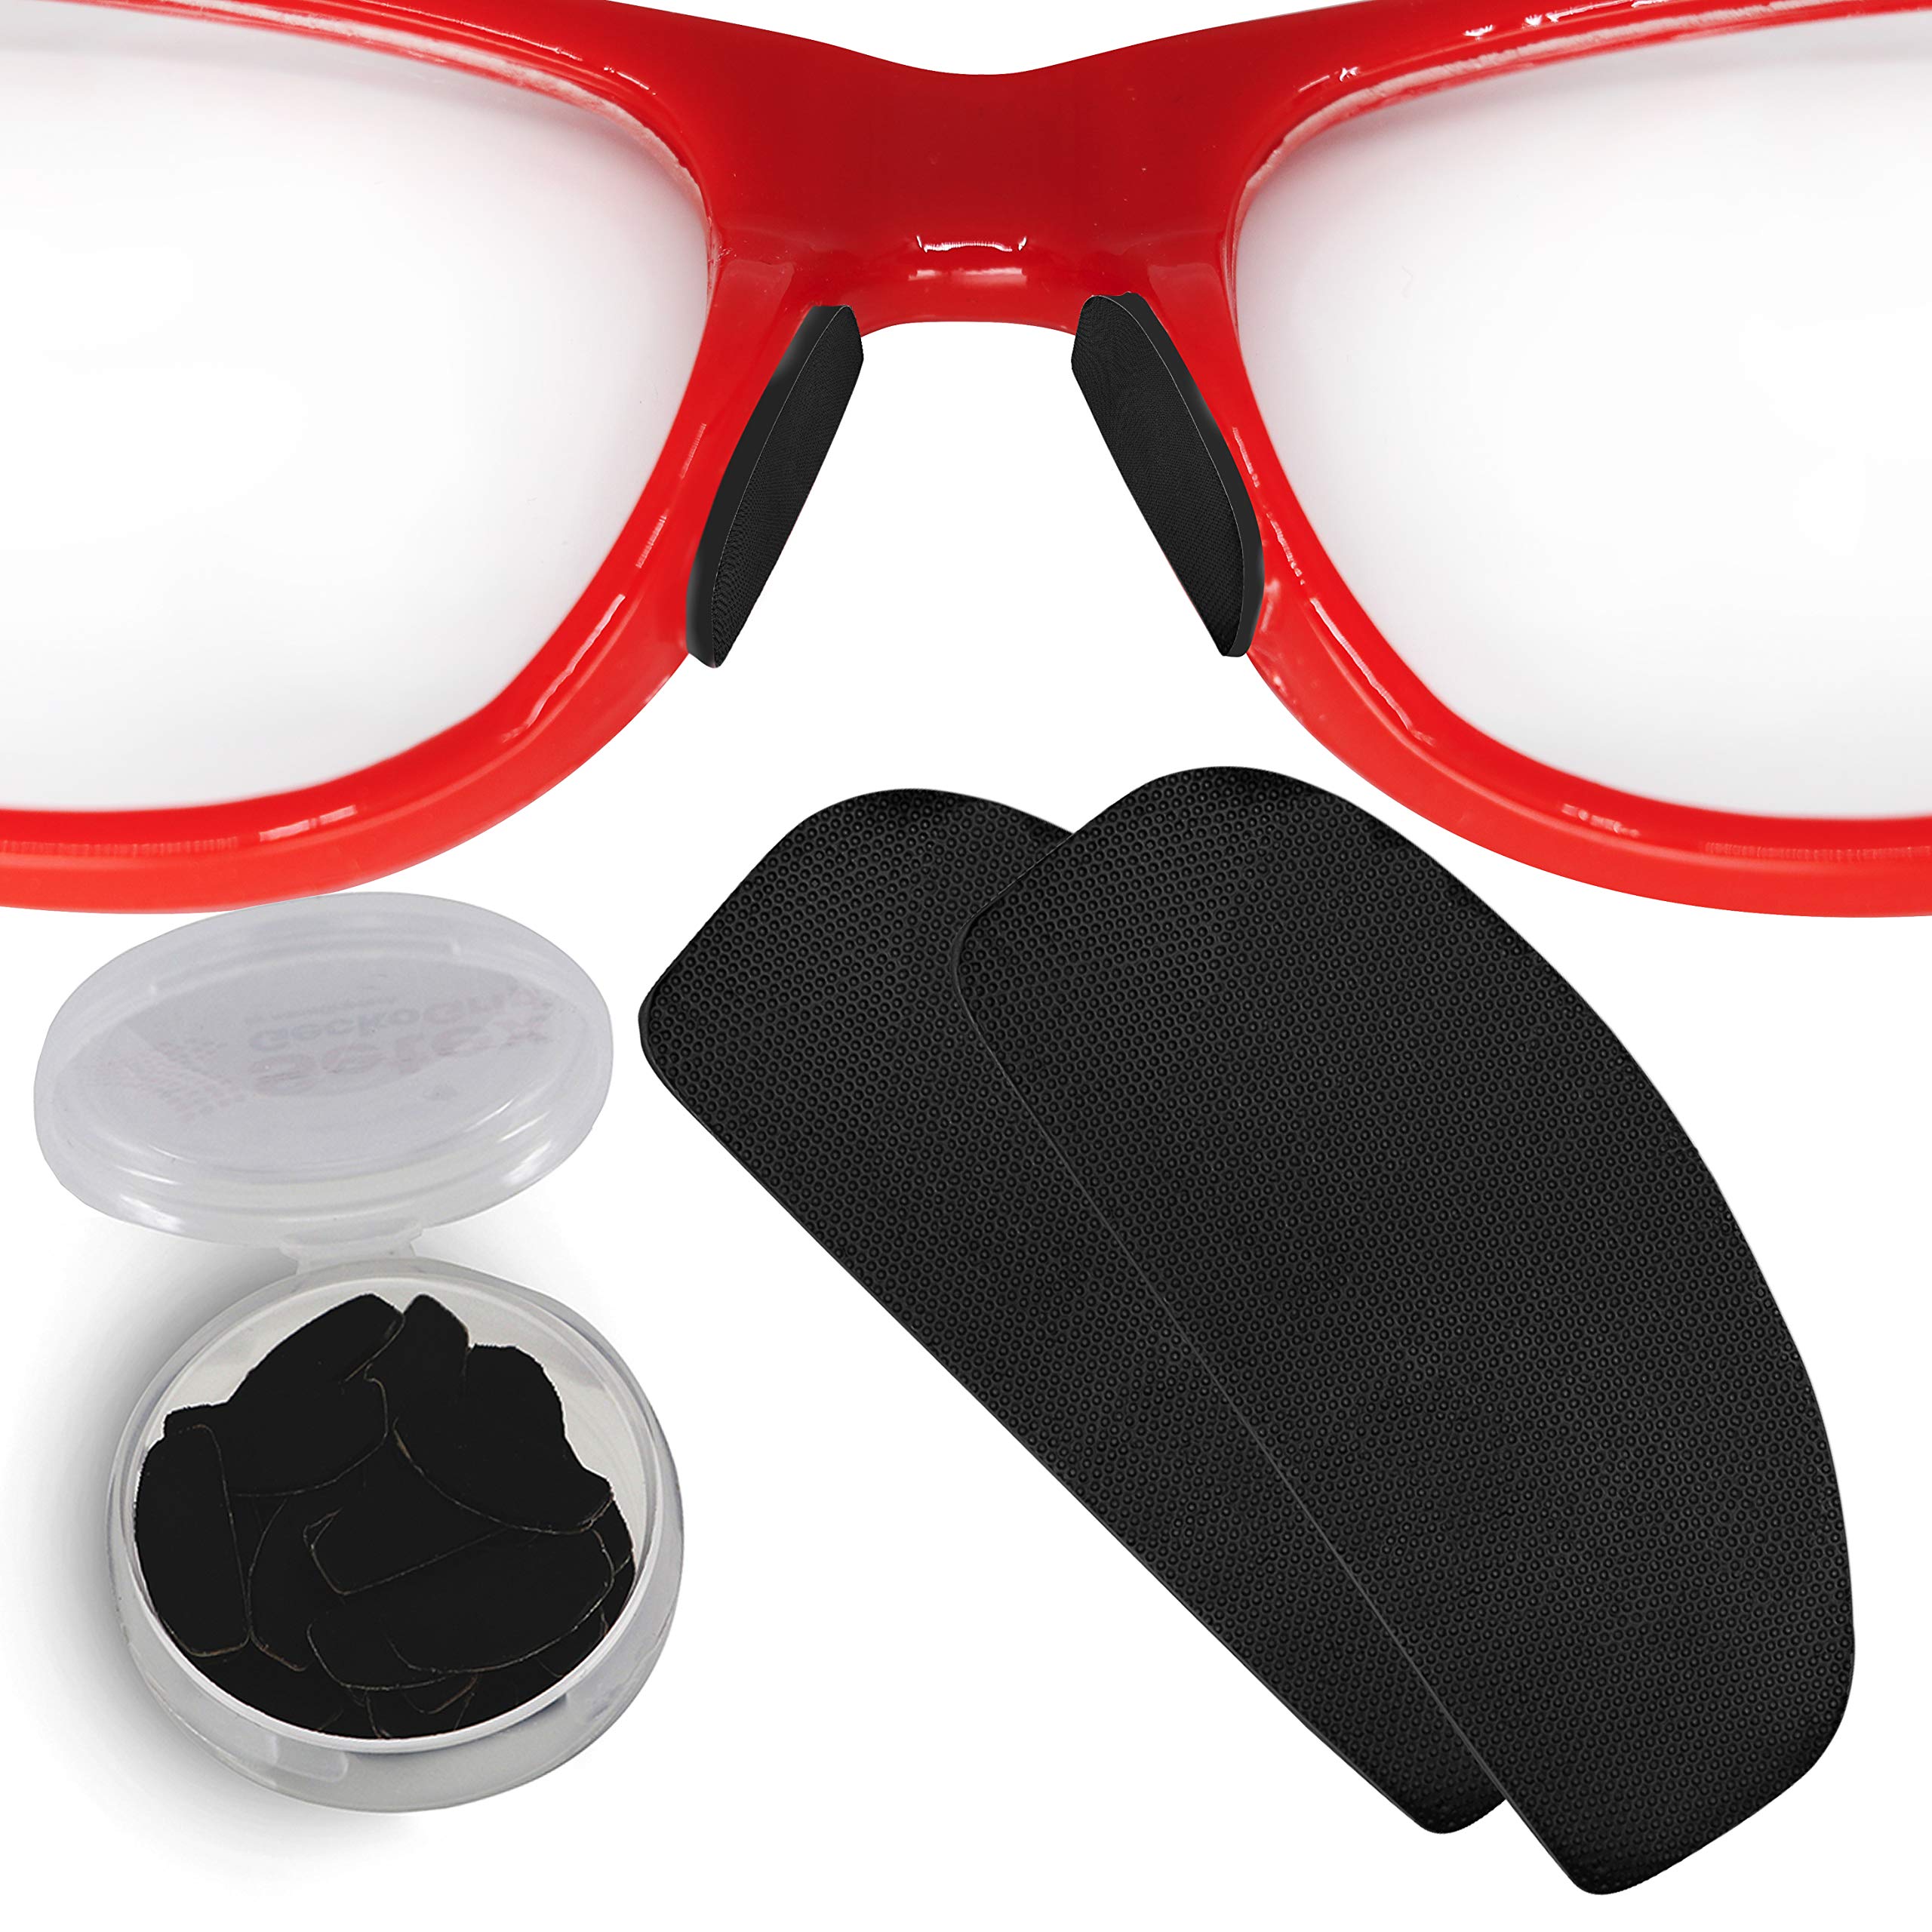 Setex® Eyeglass Nose Pads, Anti-Slip & Sweat-Proof